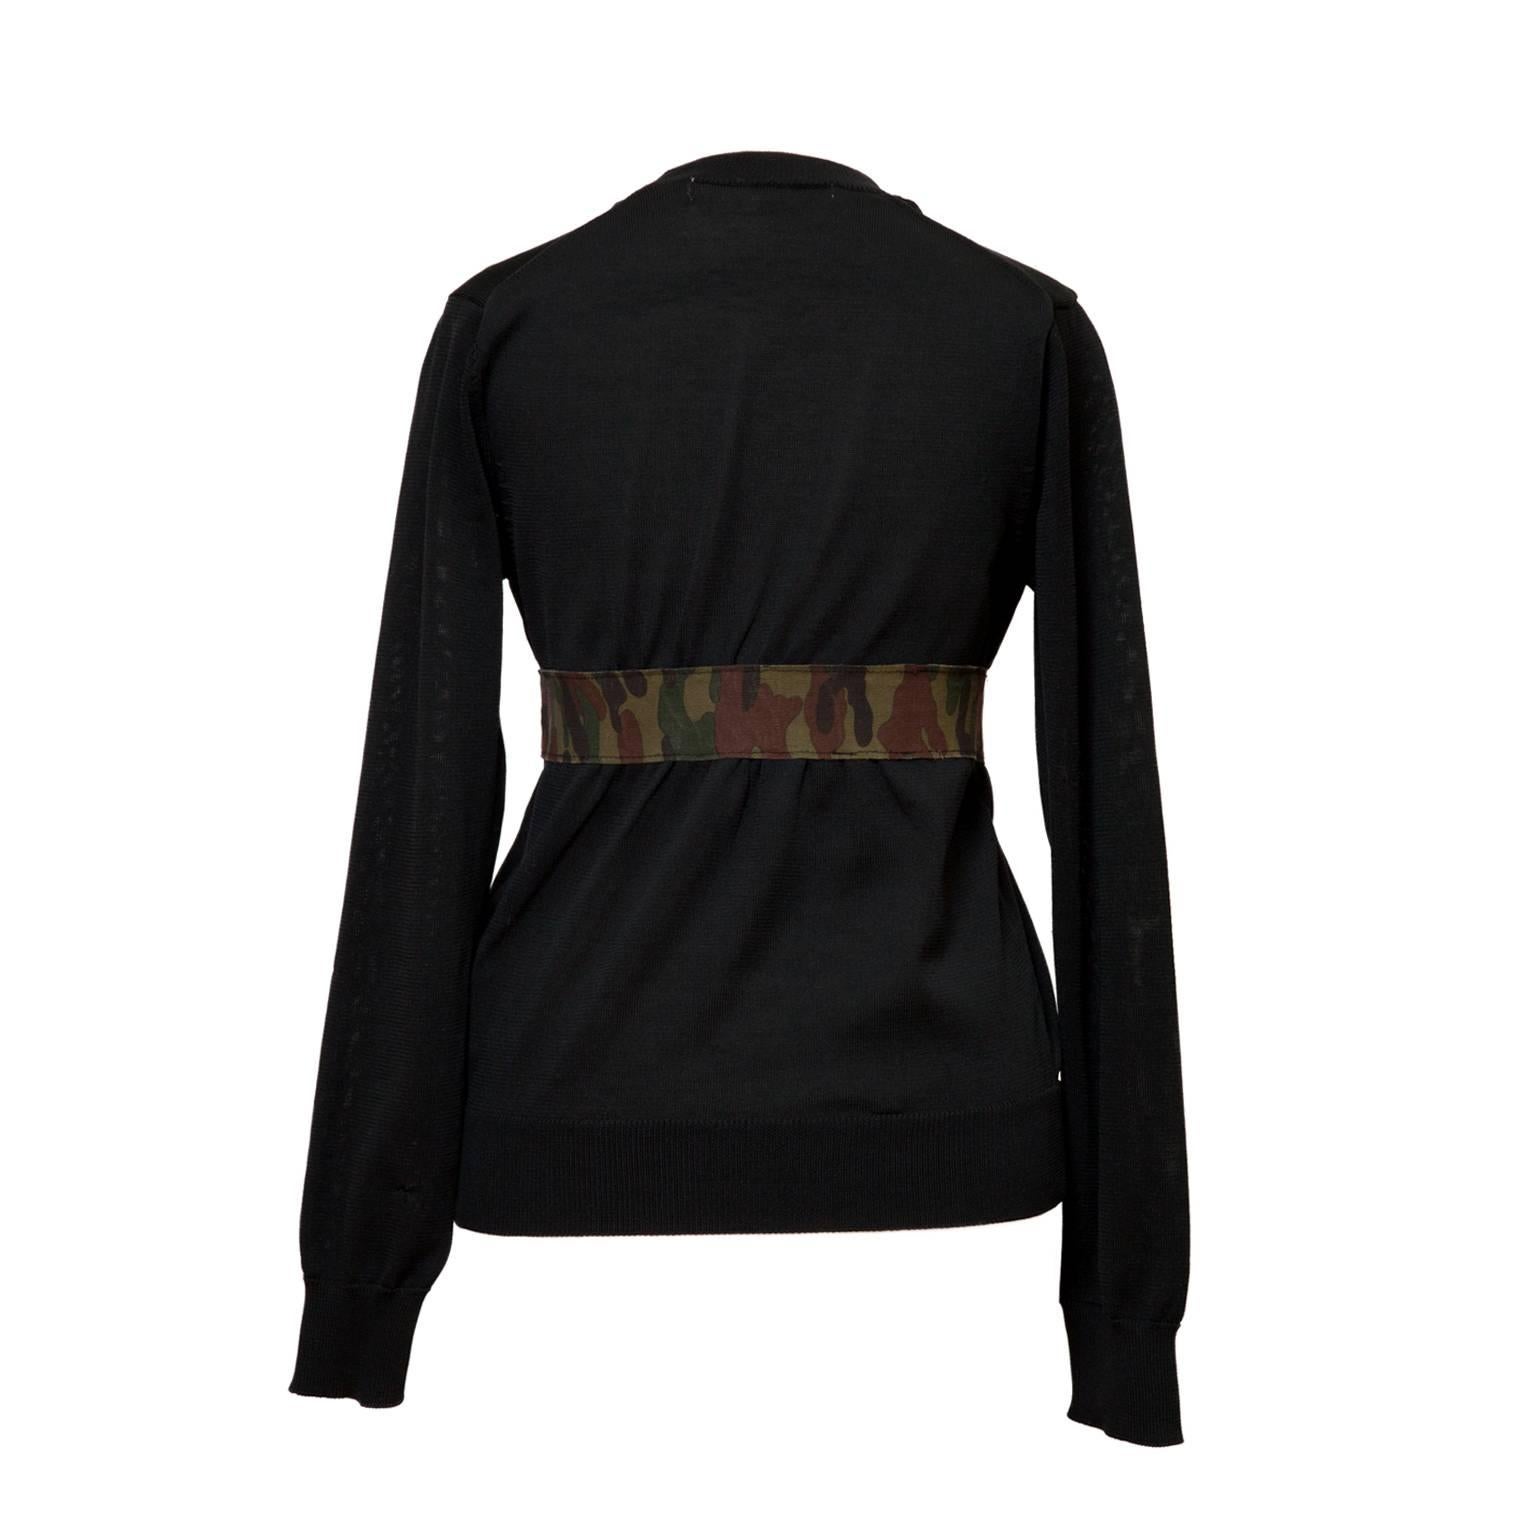 Comme des Garcons black top with camouflage tape detail from AD 2000.
Polyester 100%
Measurements : 
Sleeve : 60 cm
Shoulder : 36 cm
Length : 57cm
Under arm : 41 cm 
